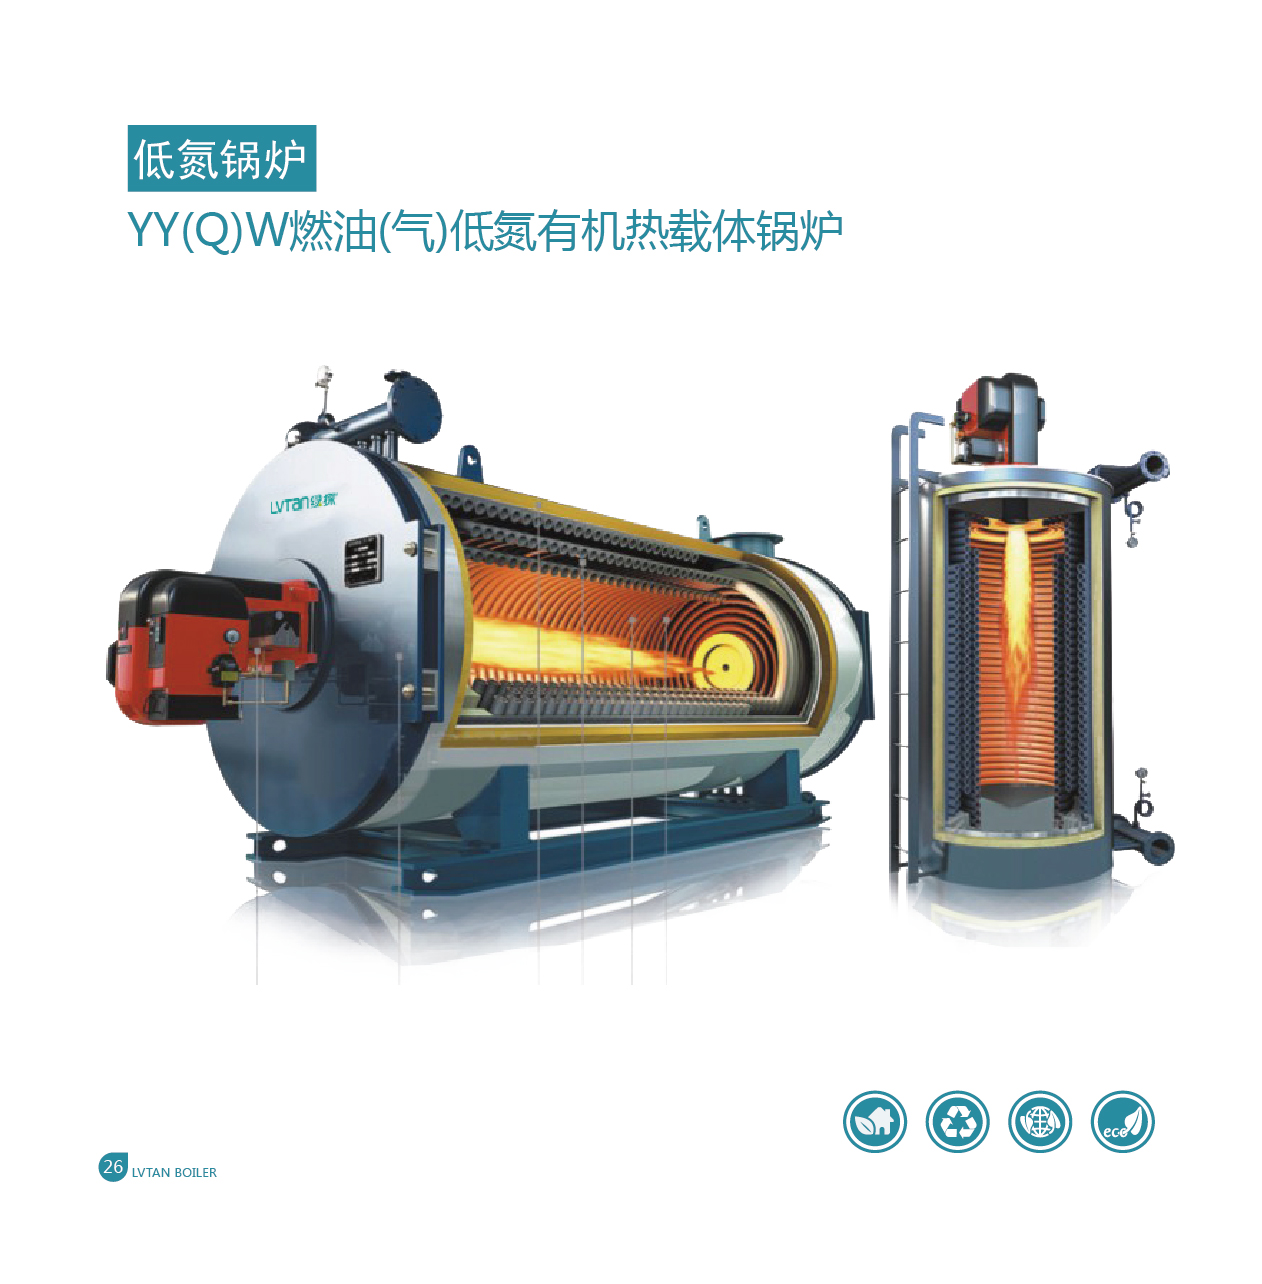 YY(Q)W燃油(气)低氮有机热载体锅炉